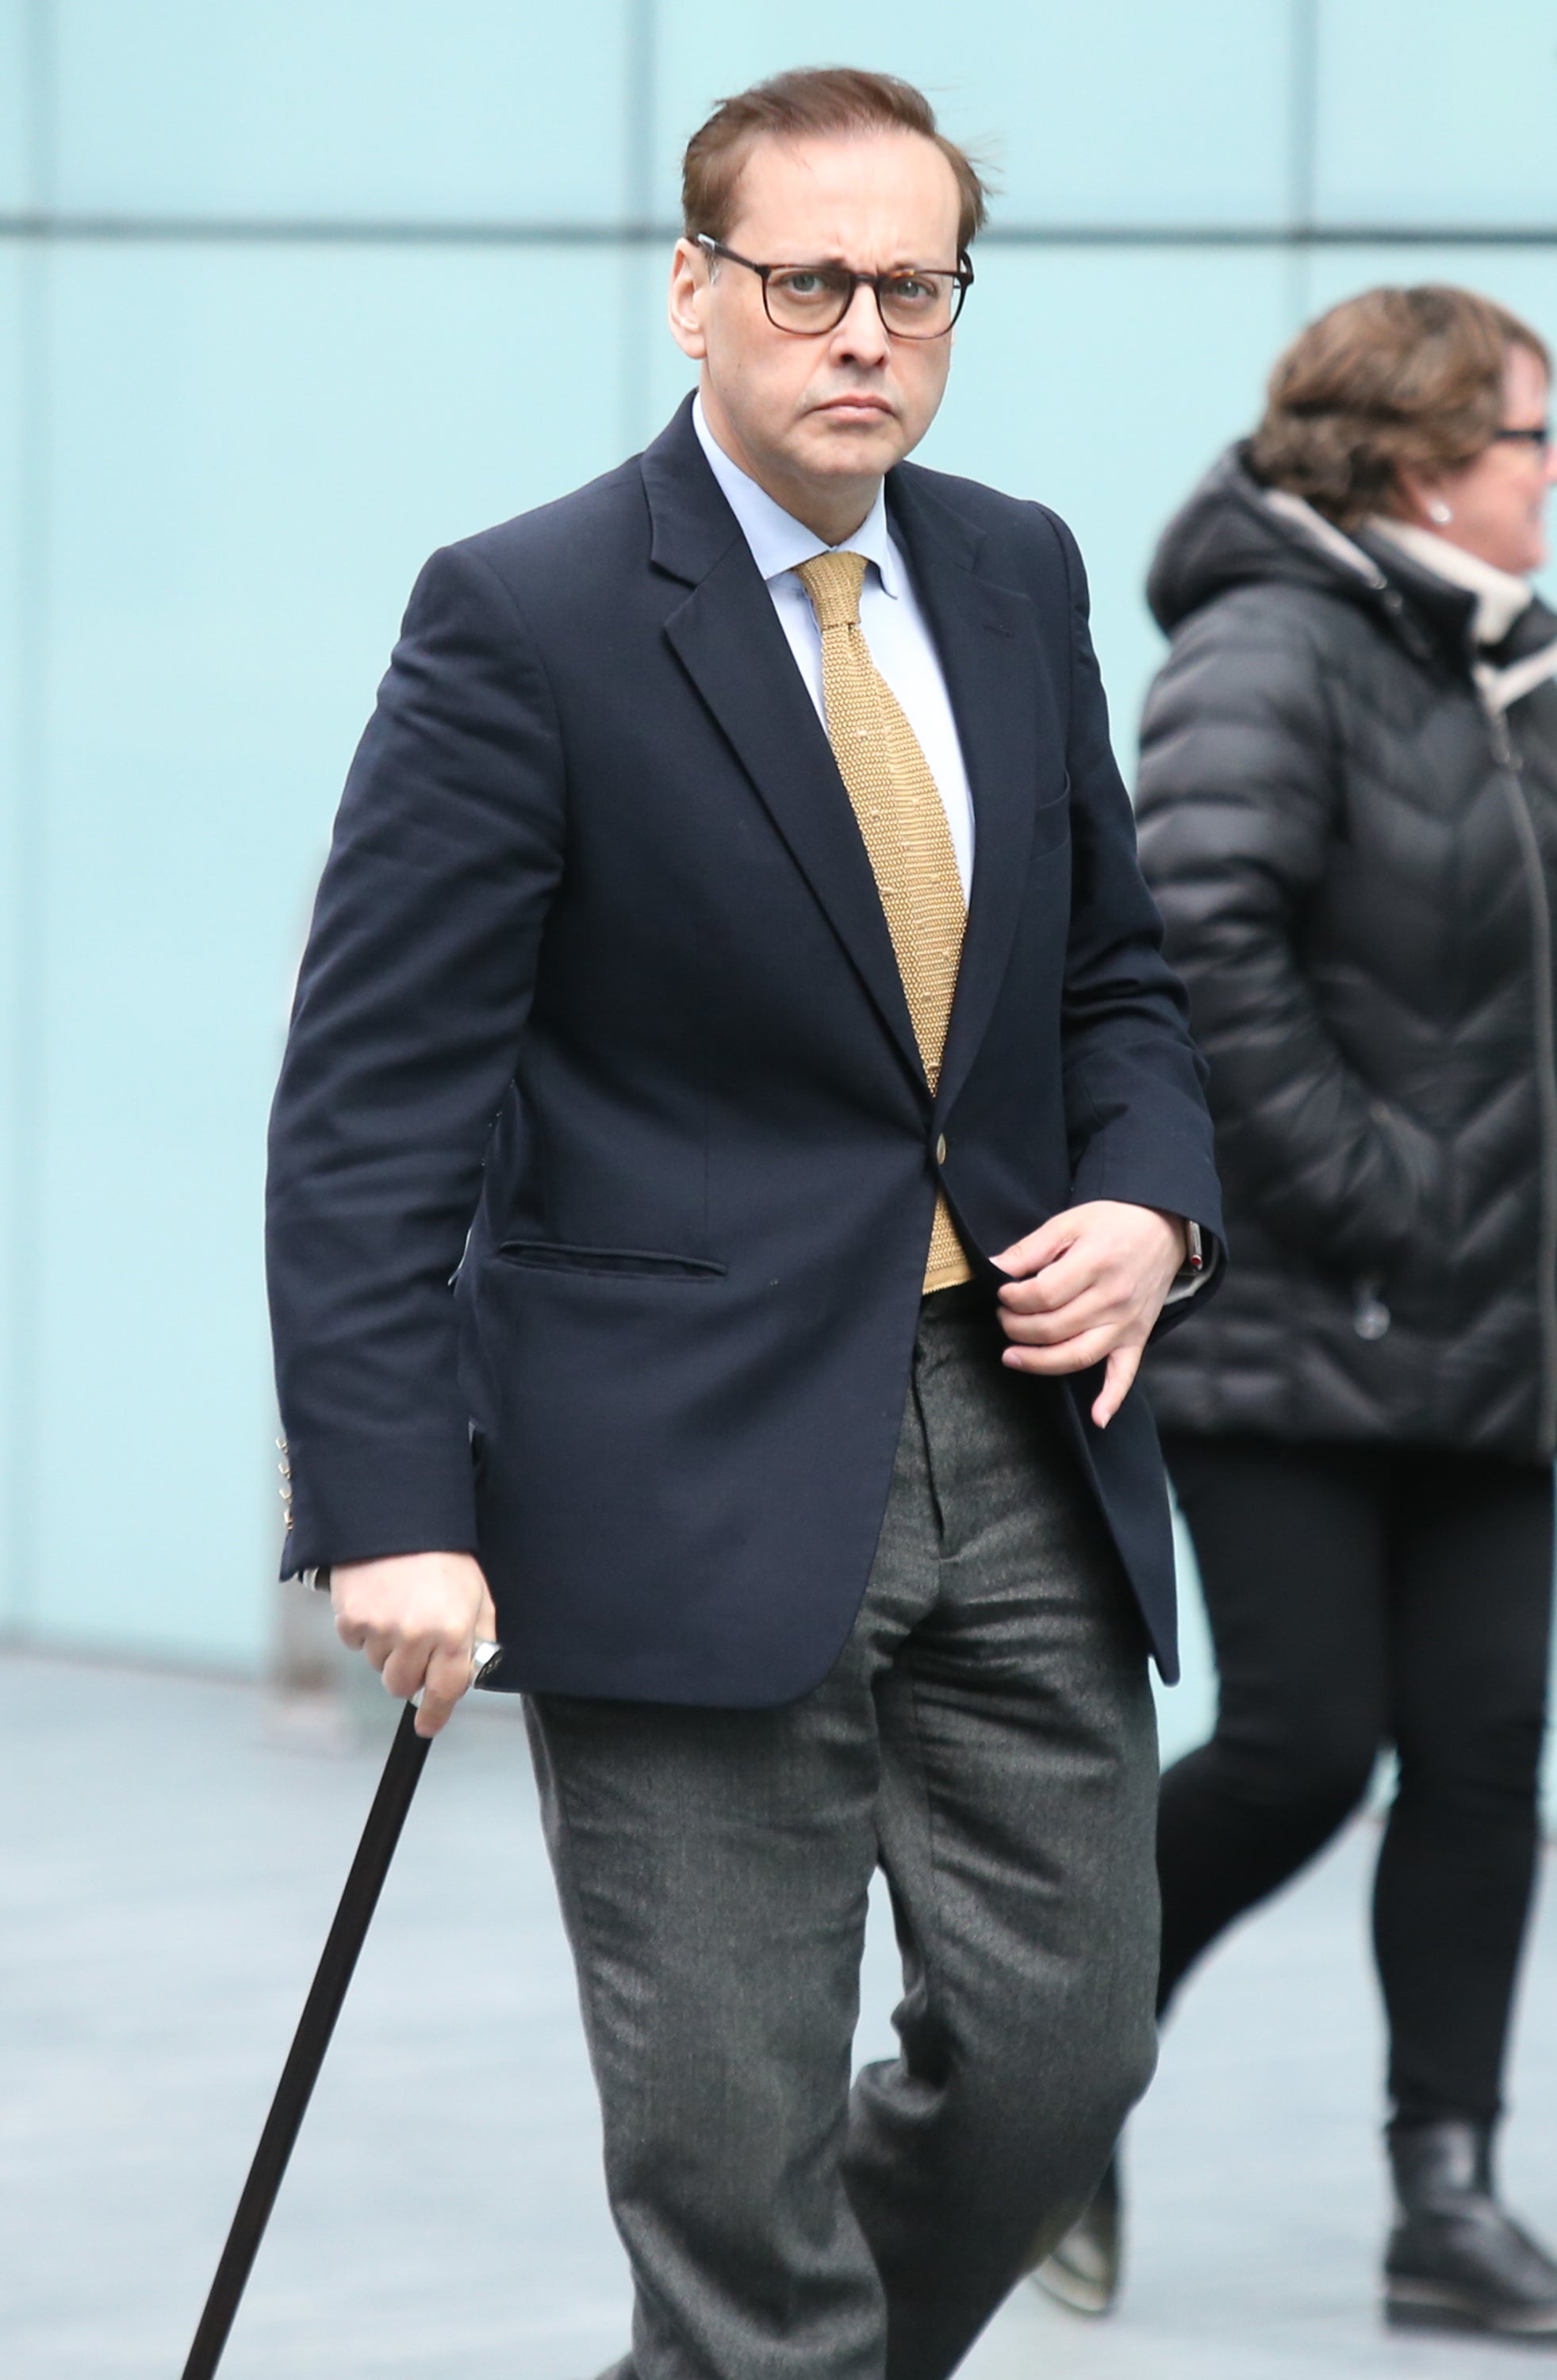 Tory MP Imran Ahmad Khan leaves Southwark Crown Court (James Manning/PA)